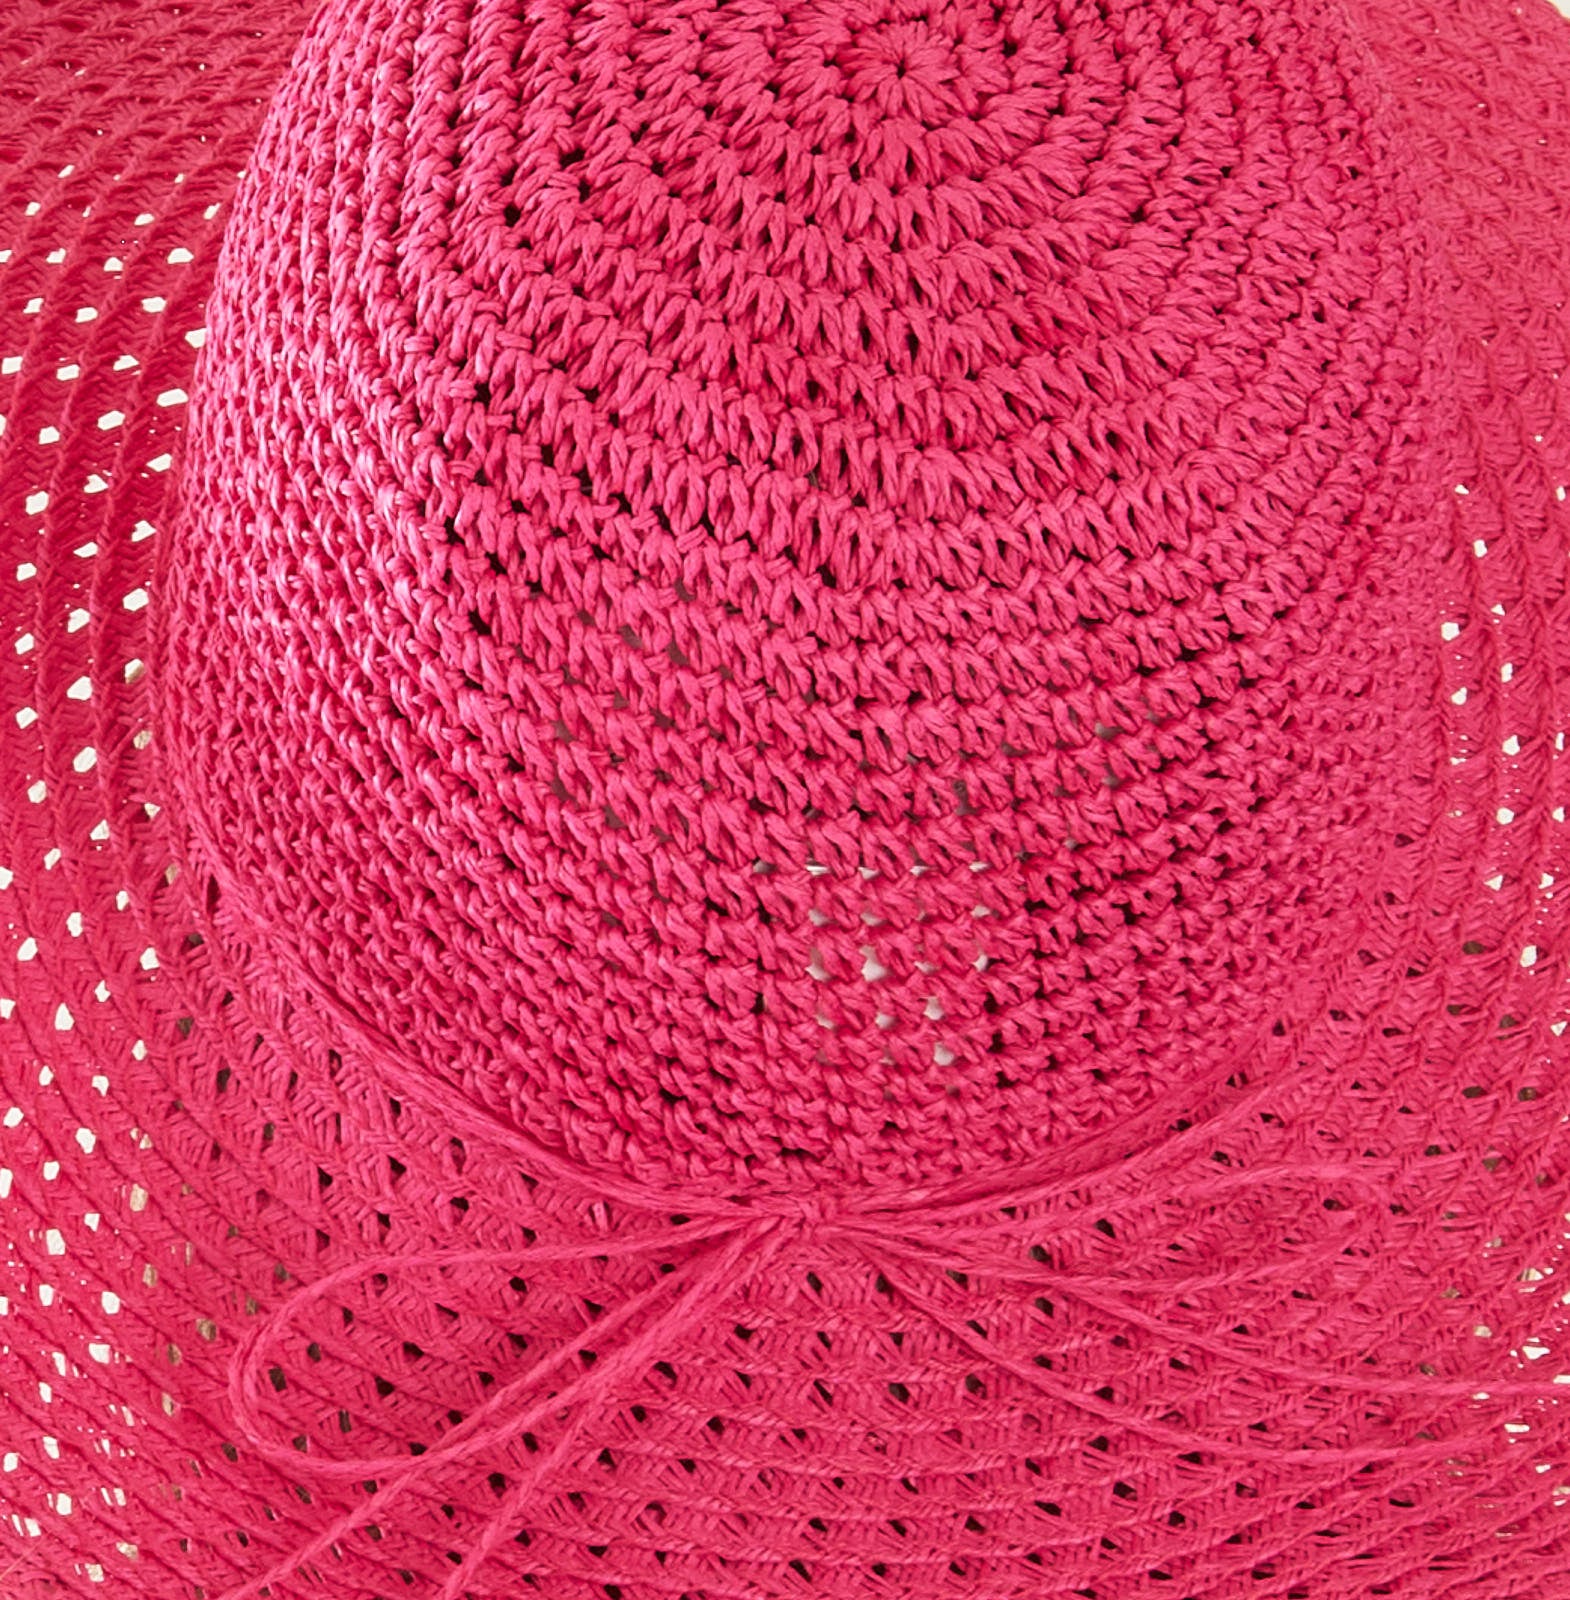 Fuchsia Bow Paper Crochet Floppy Sun Hat